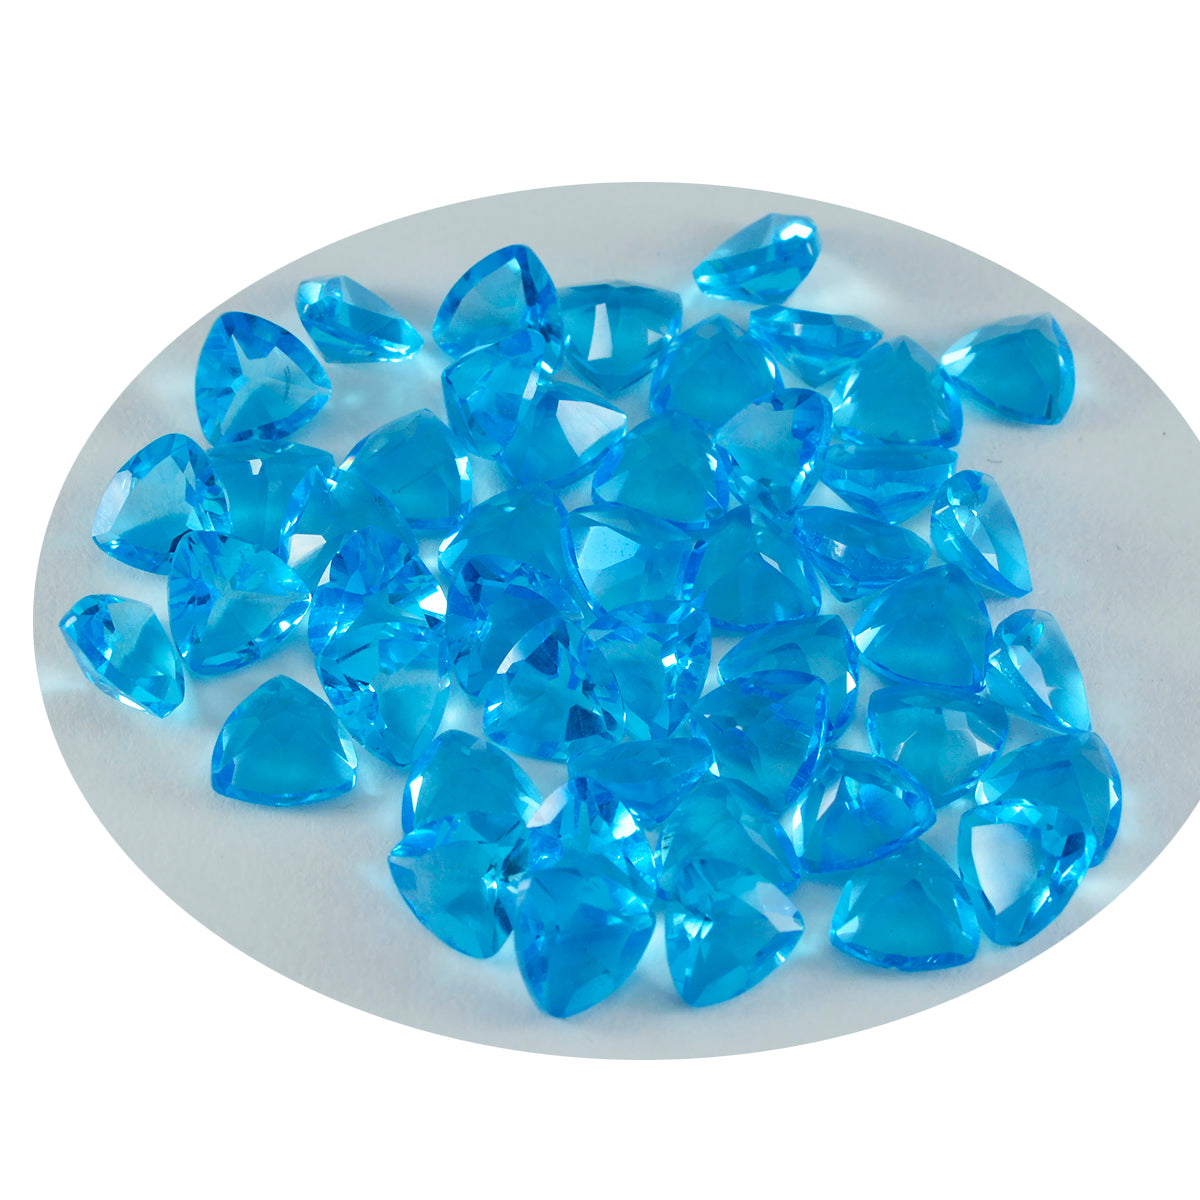 Riyogems 1PC Blue Topaz CZ Faceted 7x7 mm Trillion Shape wonderful Quality Loose Stone